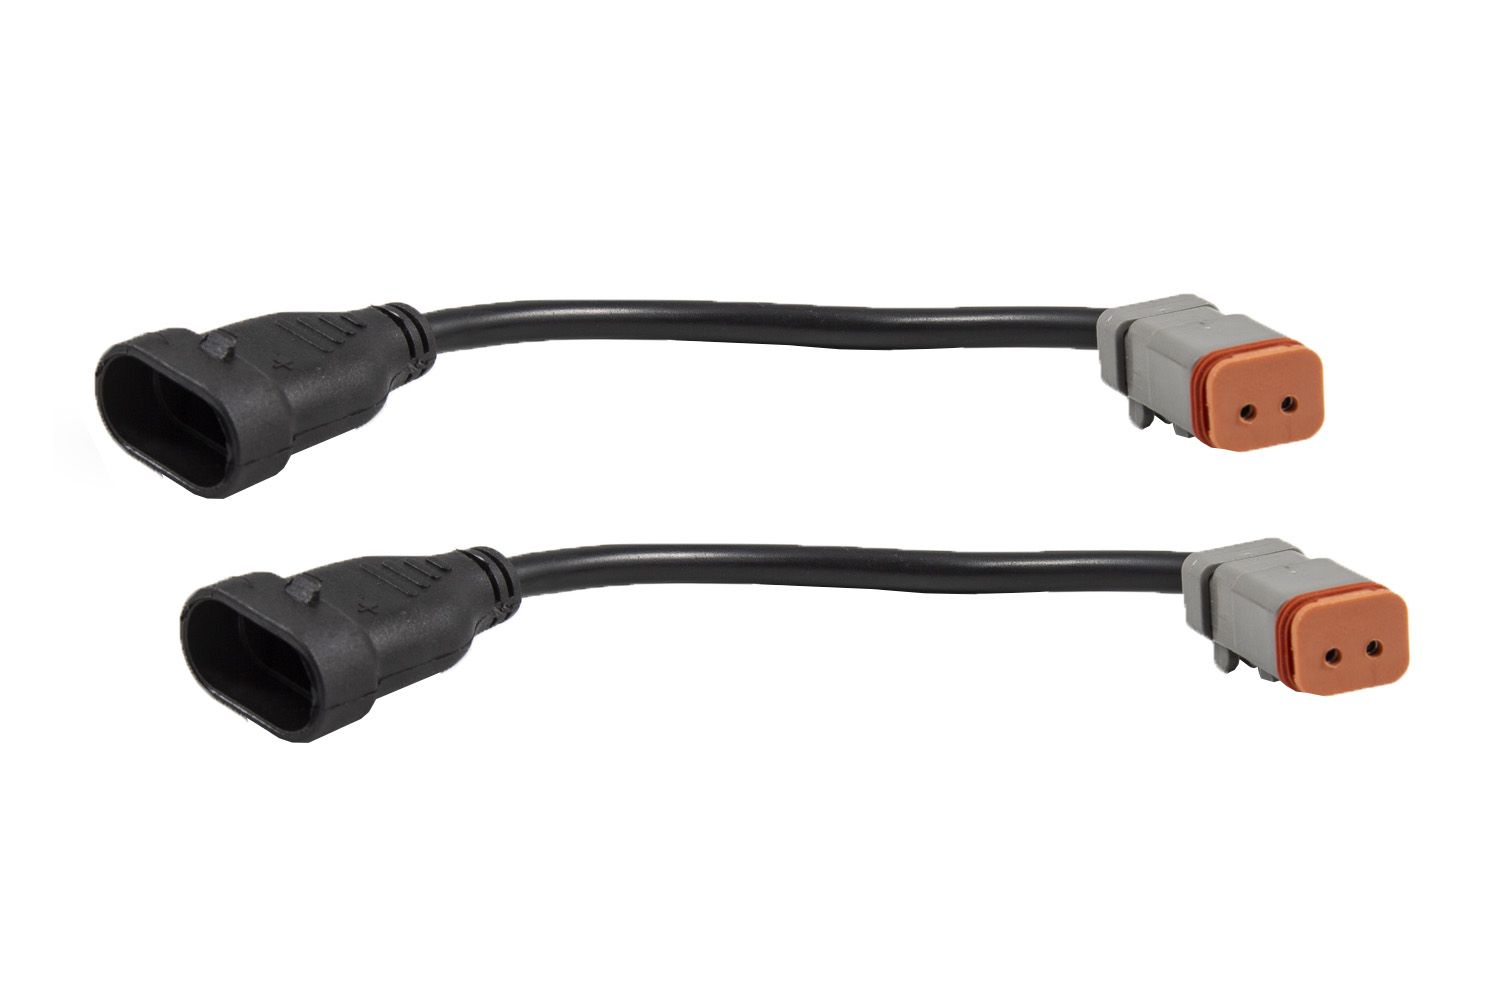 Plug-and-Play LED Light Adapter Harness H10/9005/9006 - Baja